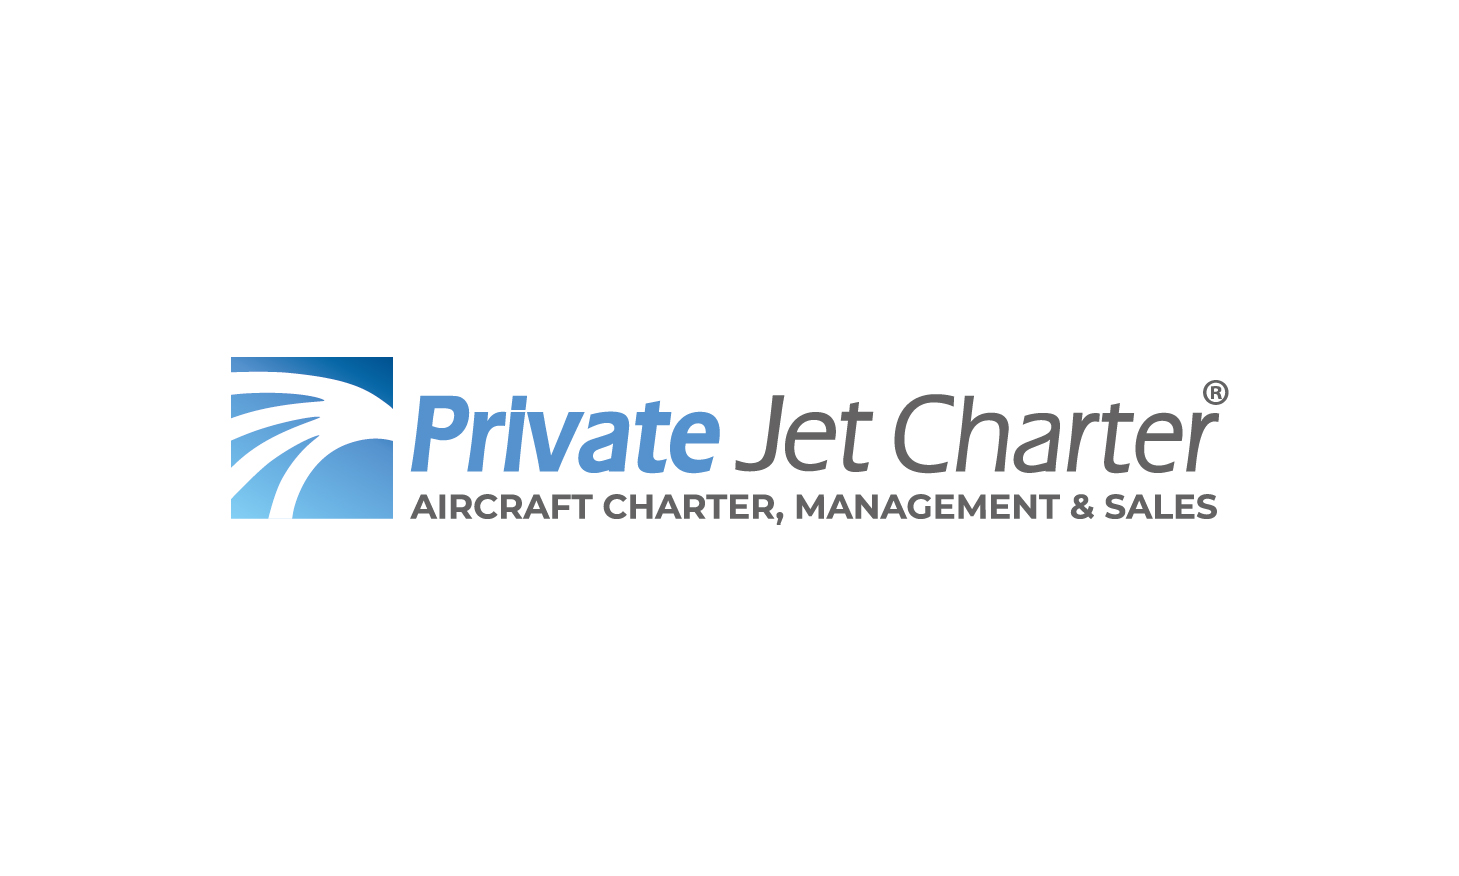 2021/06/03/private_jet_charter1.jpg